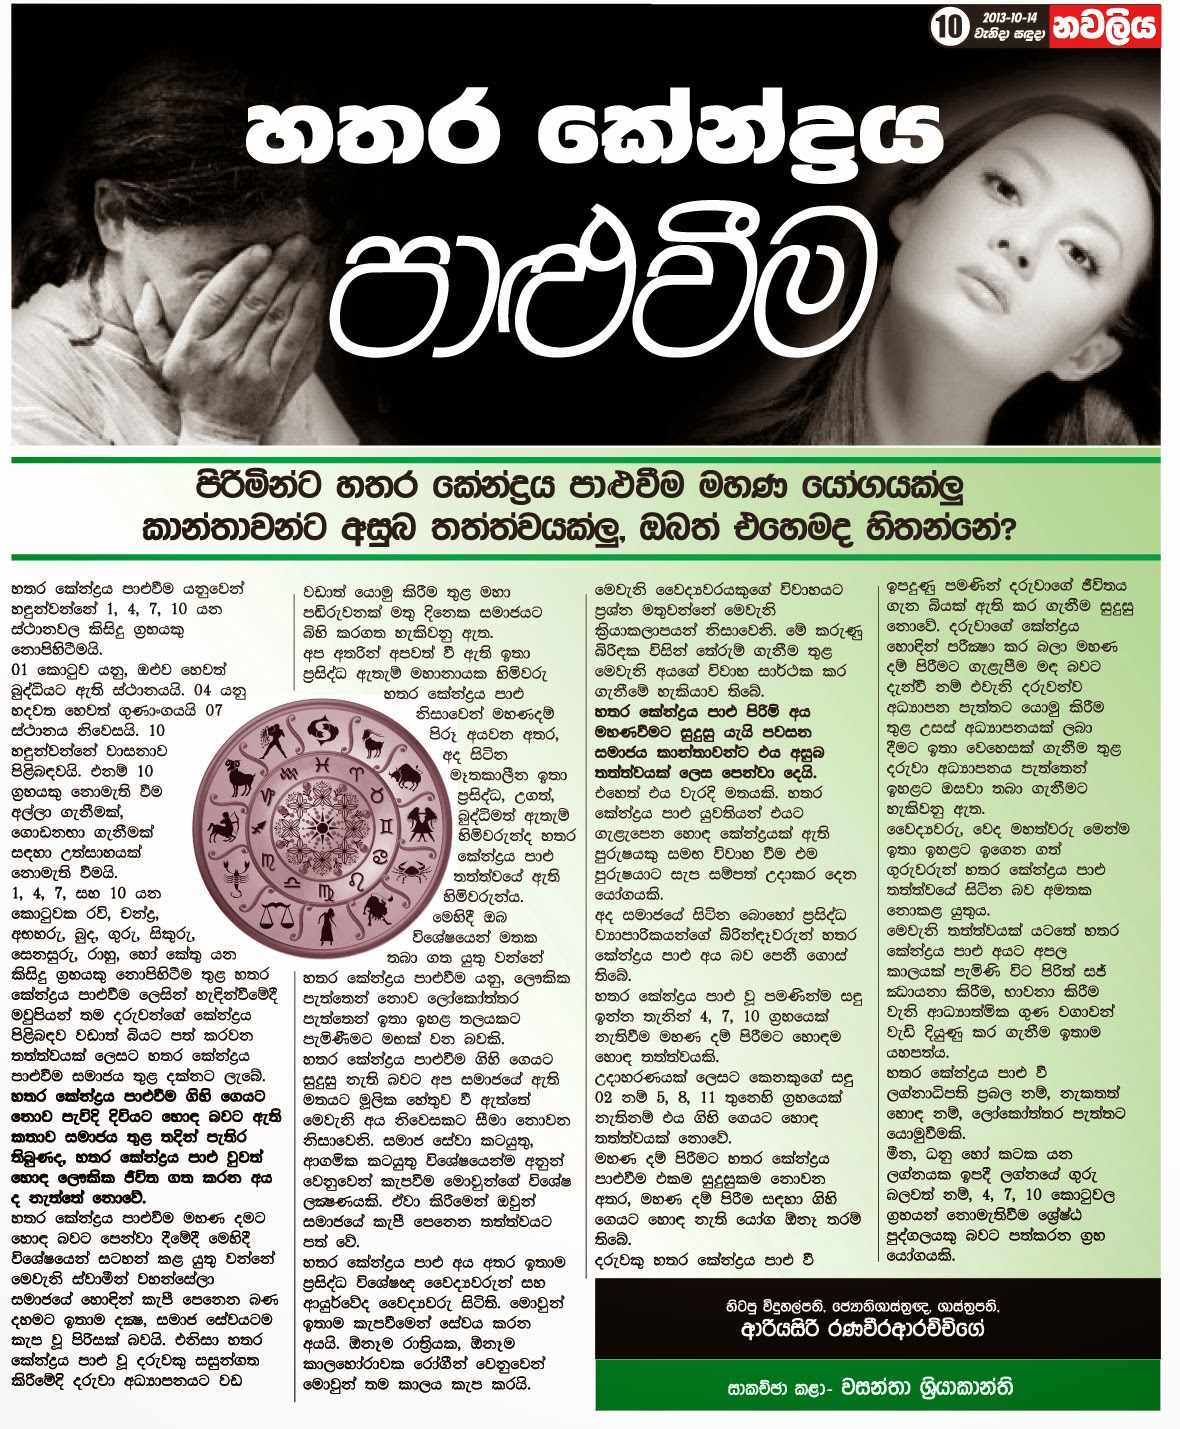 Download Sinhala Kendara Horoscope Software For Mac